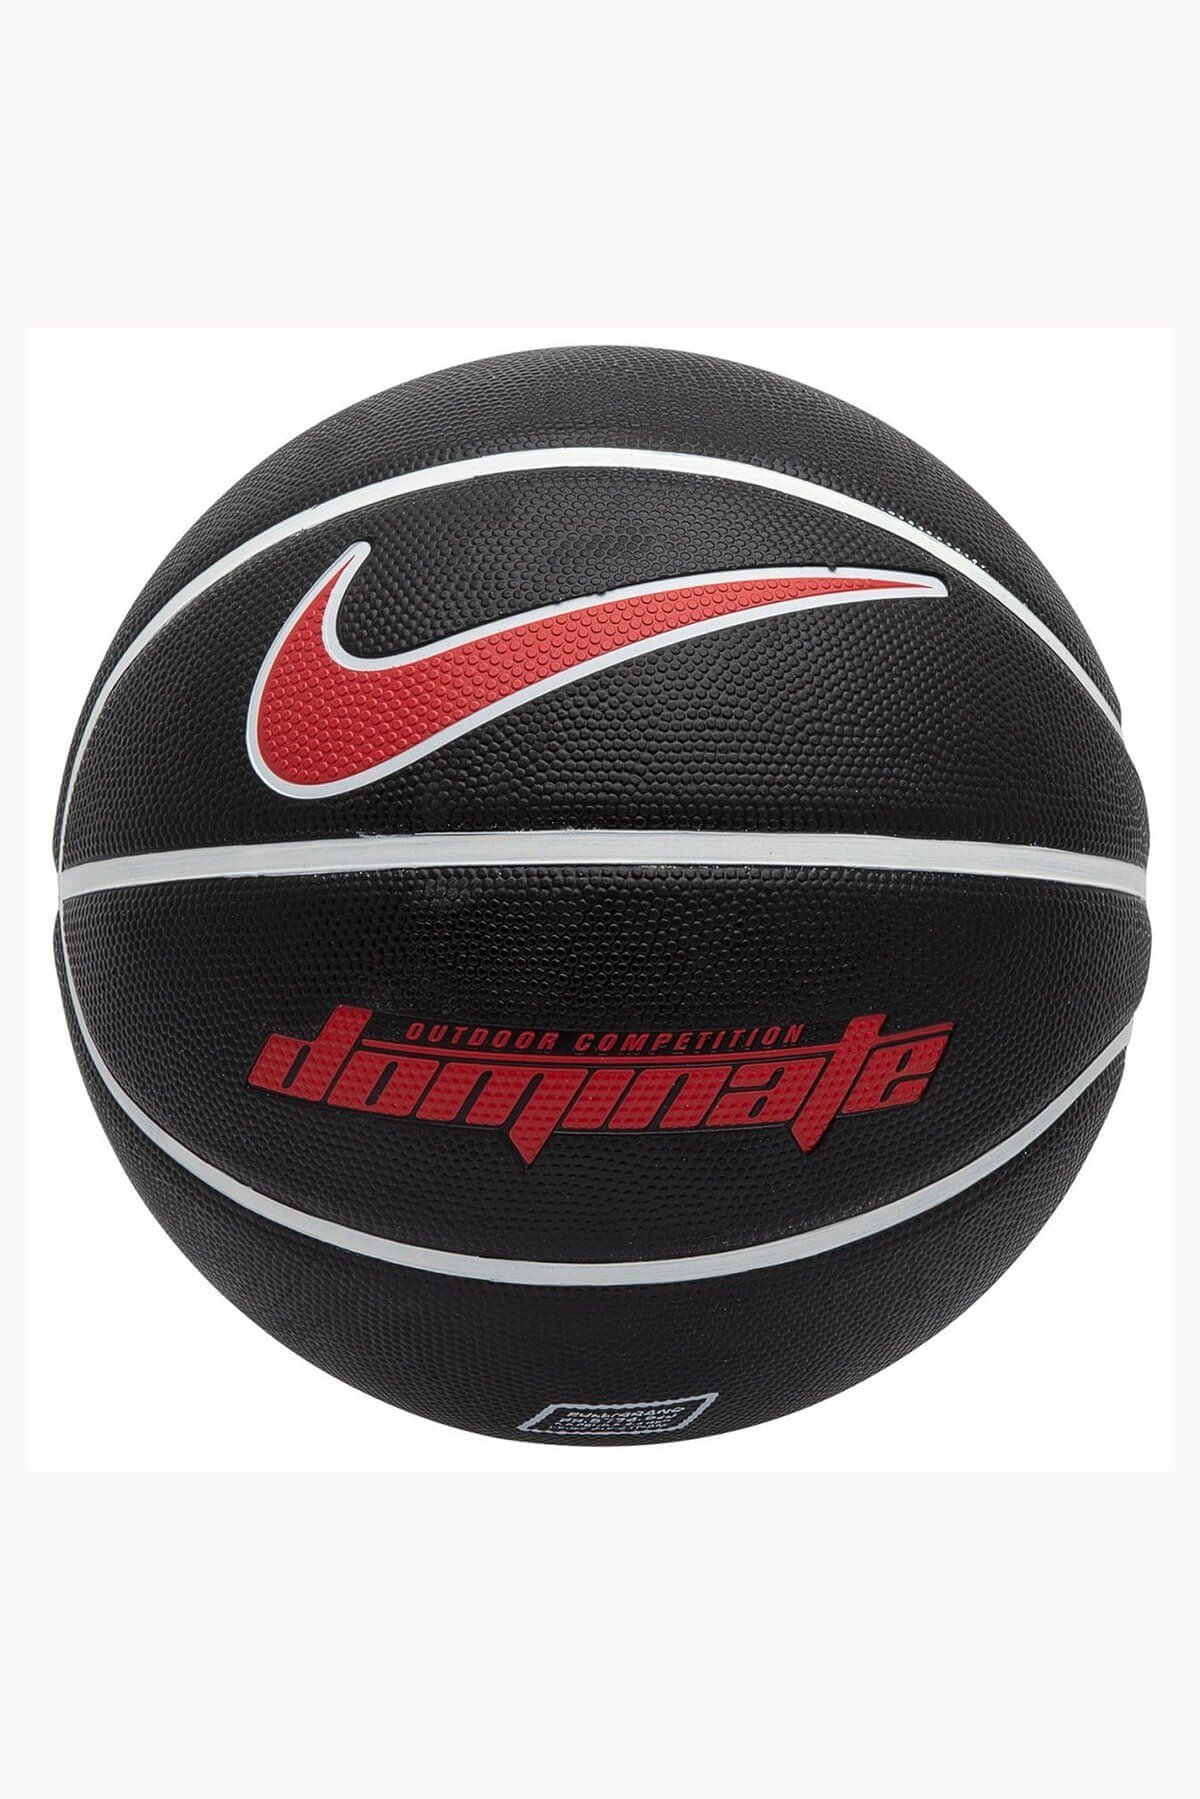 Nike Dominate Siyah Kırmızı Basketbol Topu No:7 | bayspor.com